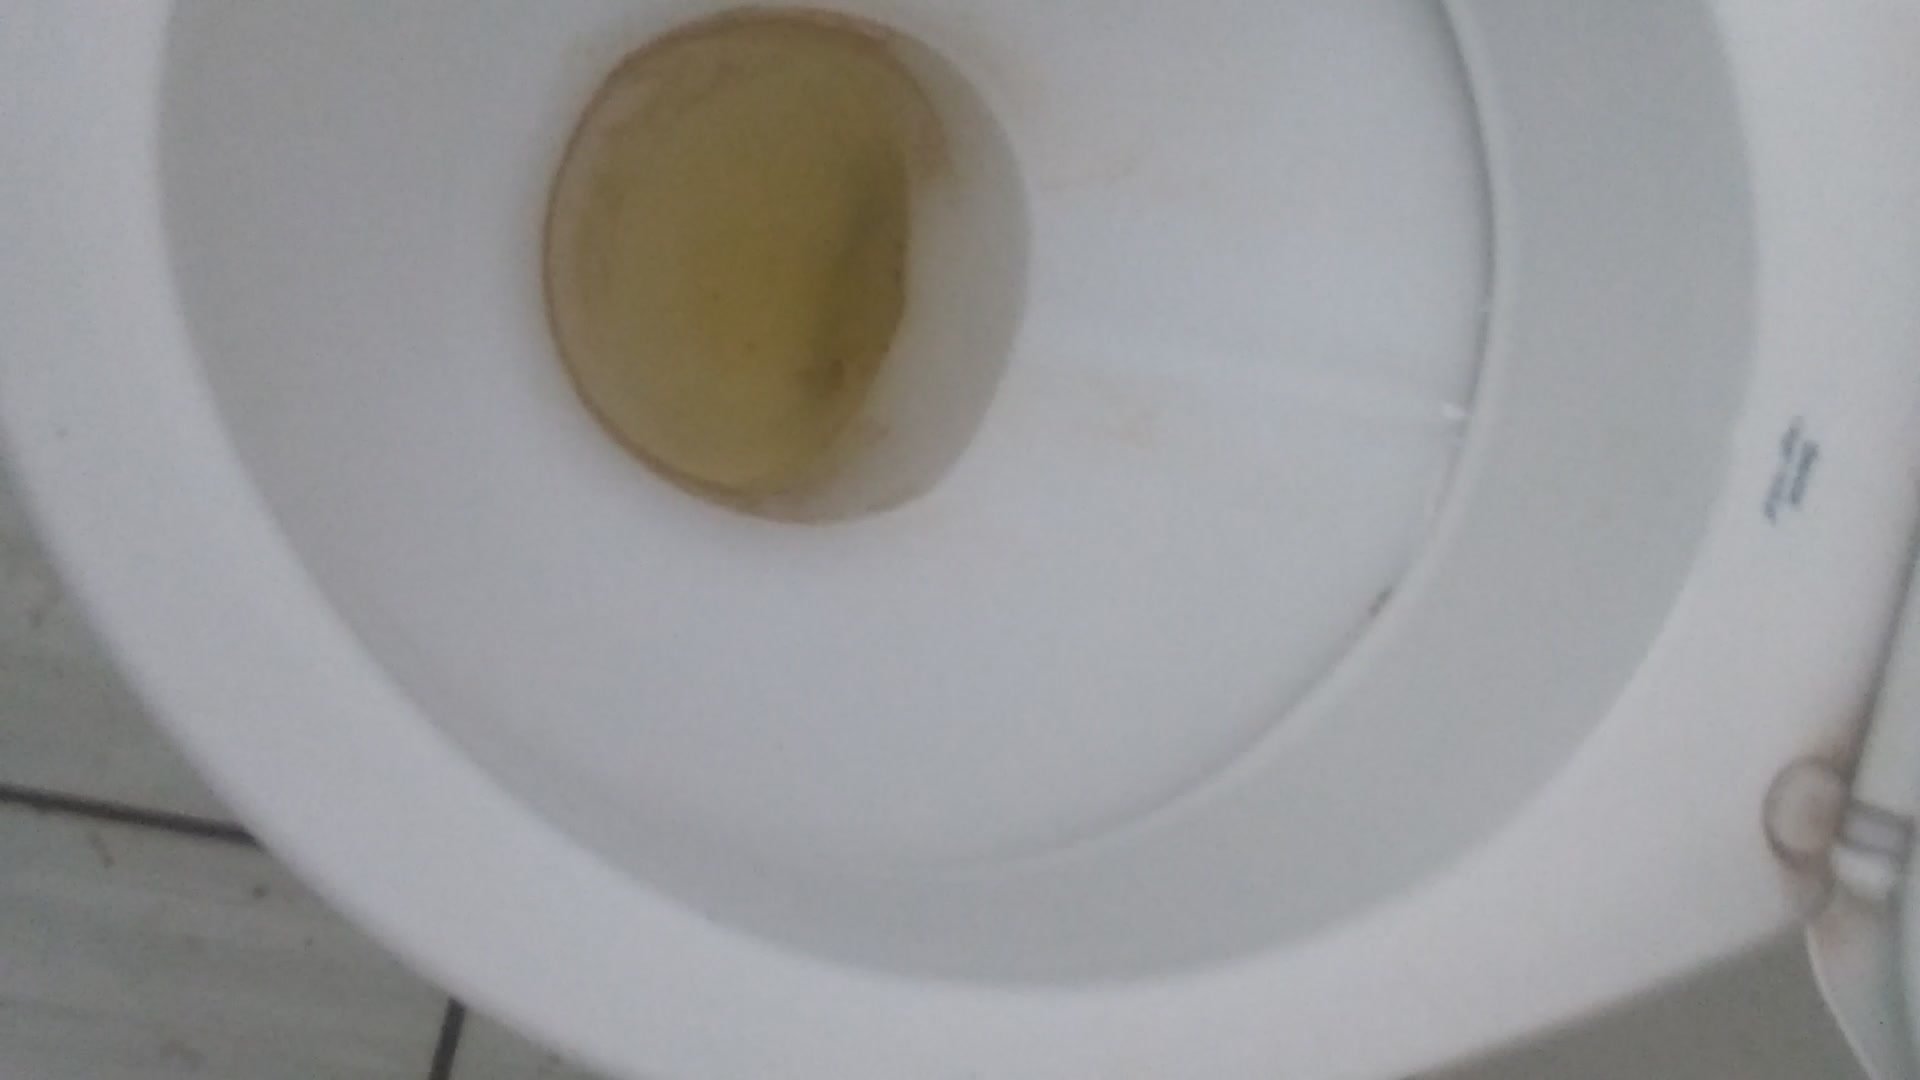 Tasty Dirty Public Toilet